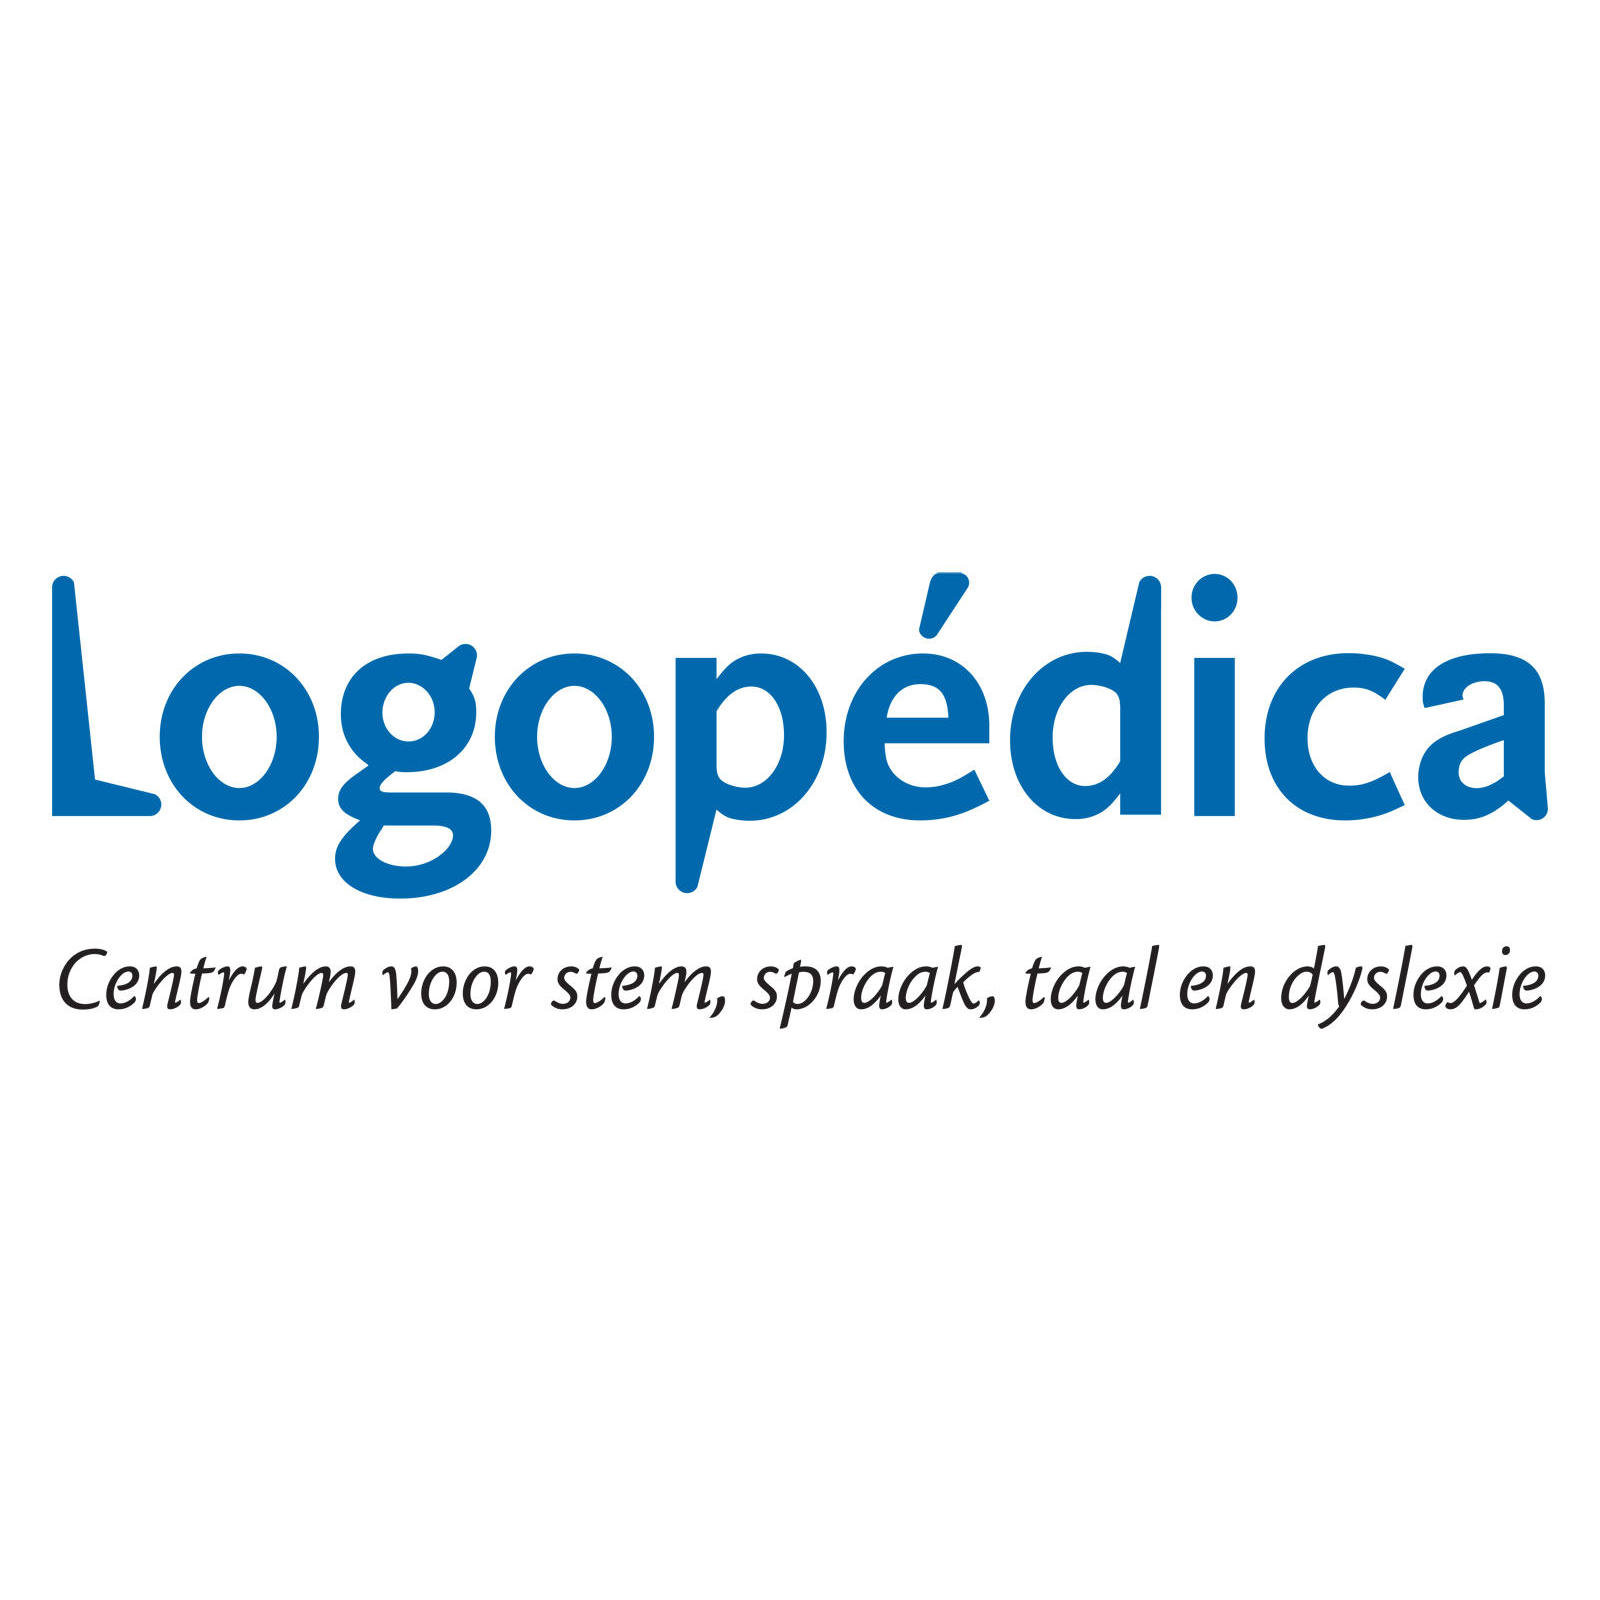 Logopédica centrum voor stem/spraak/taal/dyslexie & logopedie Logo